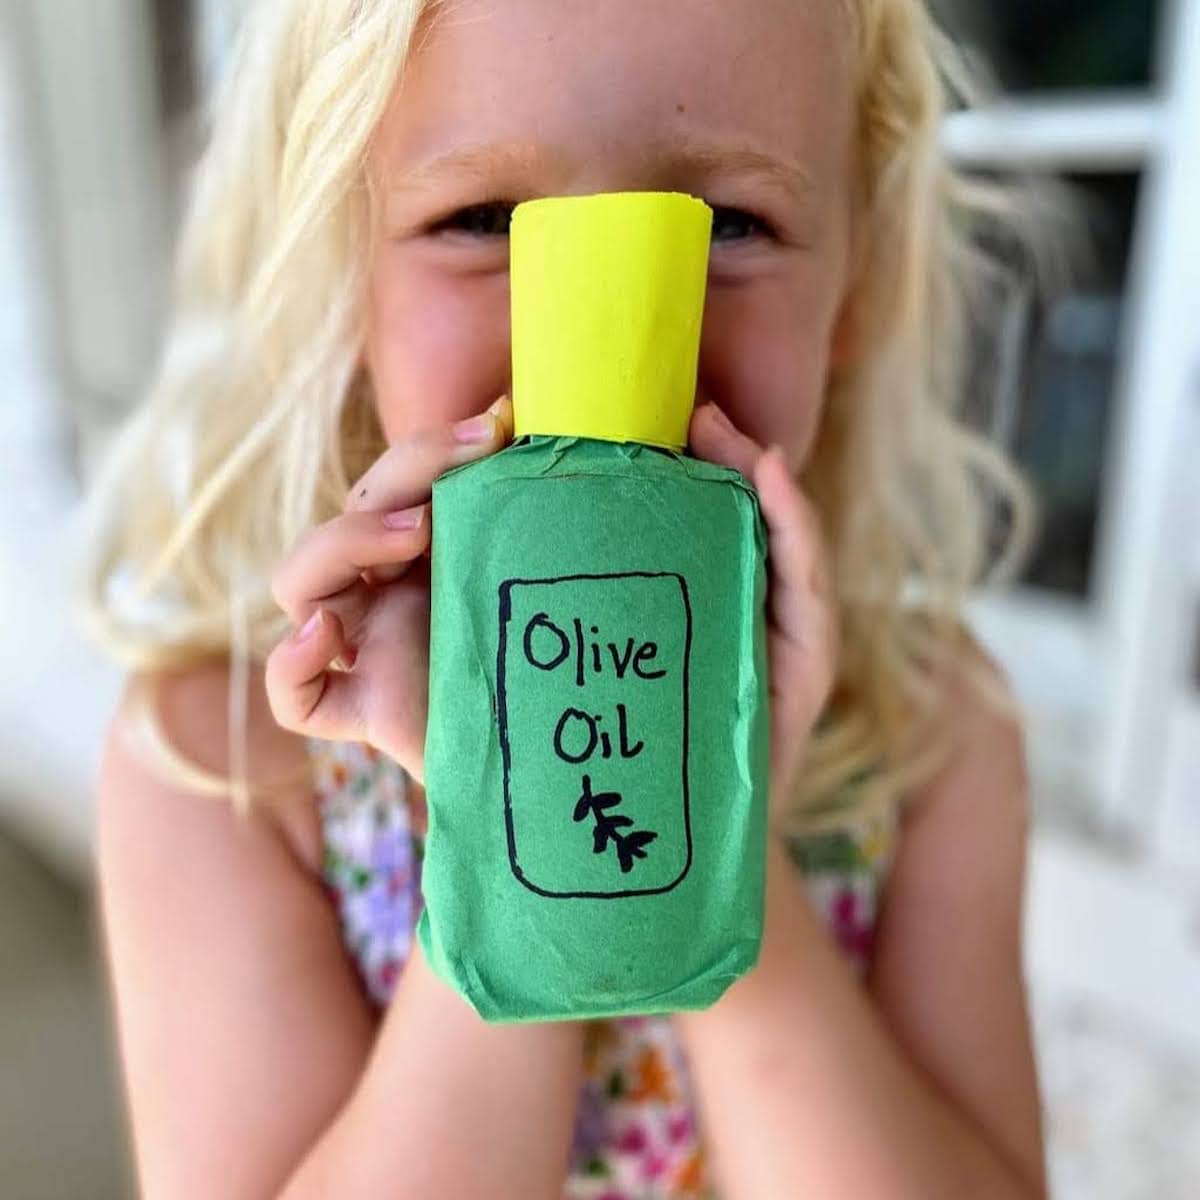 child holding pretend bottle of olive oil